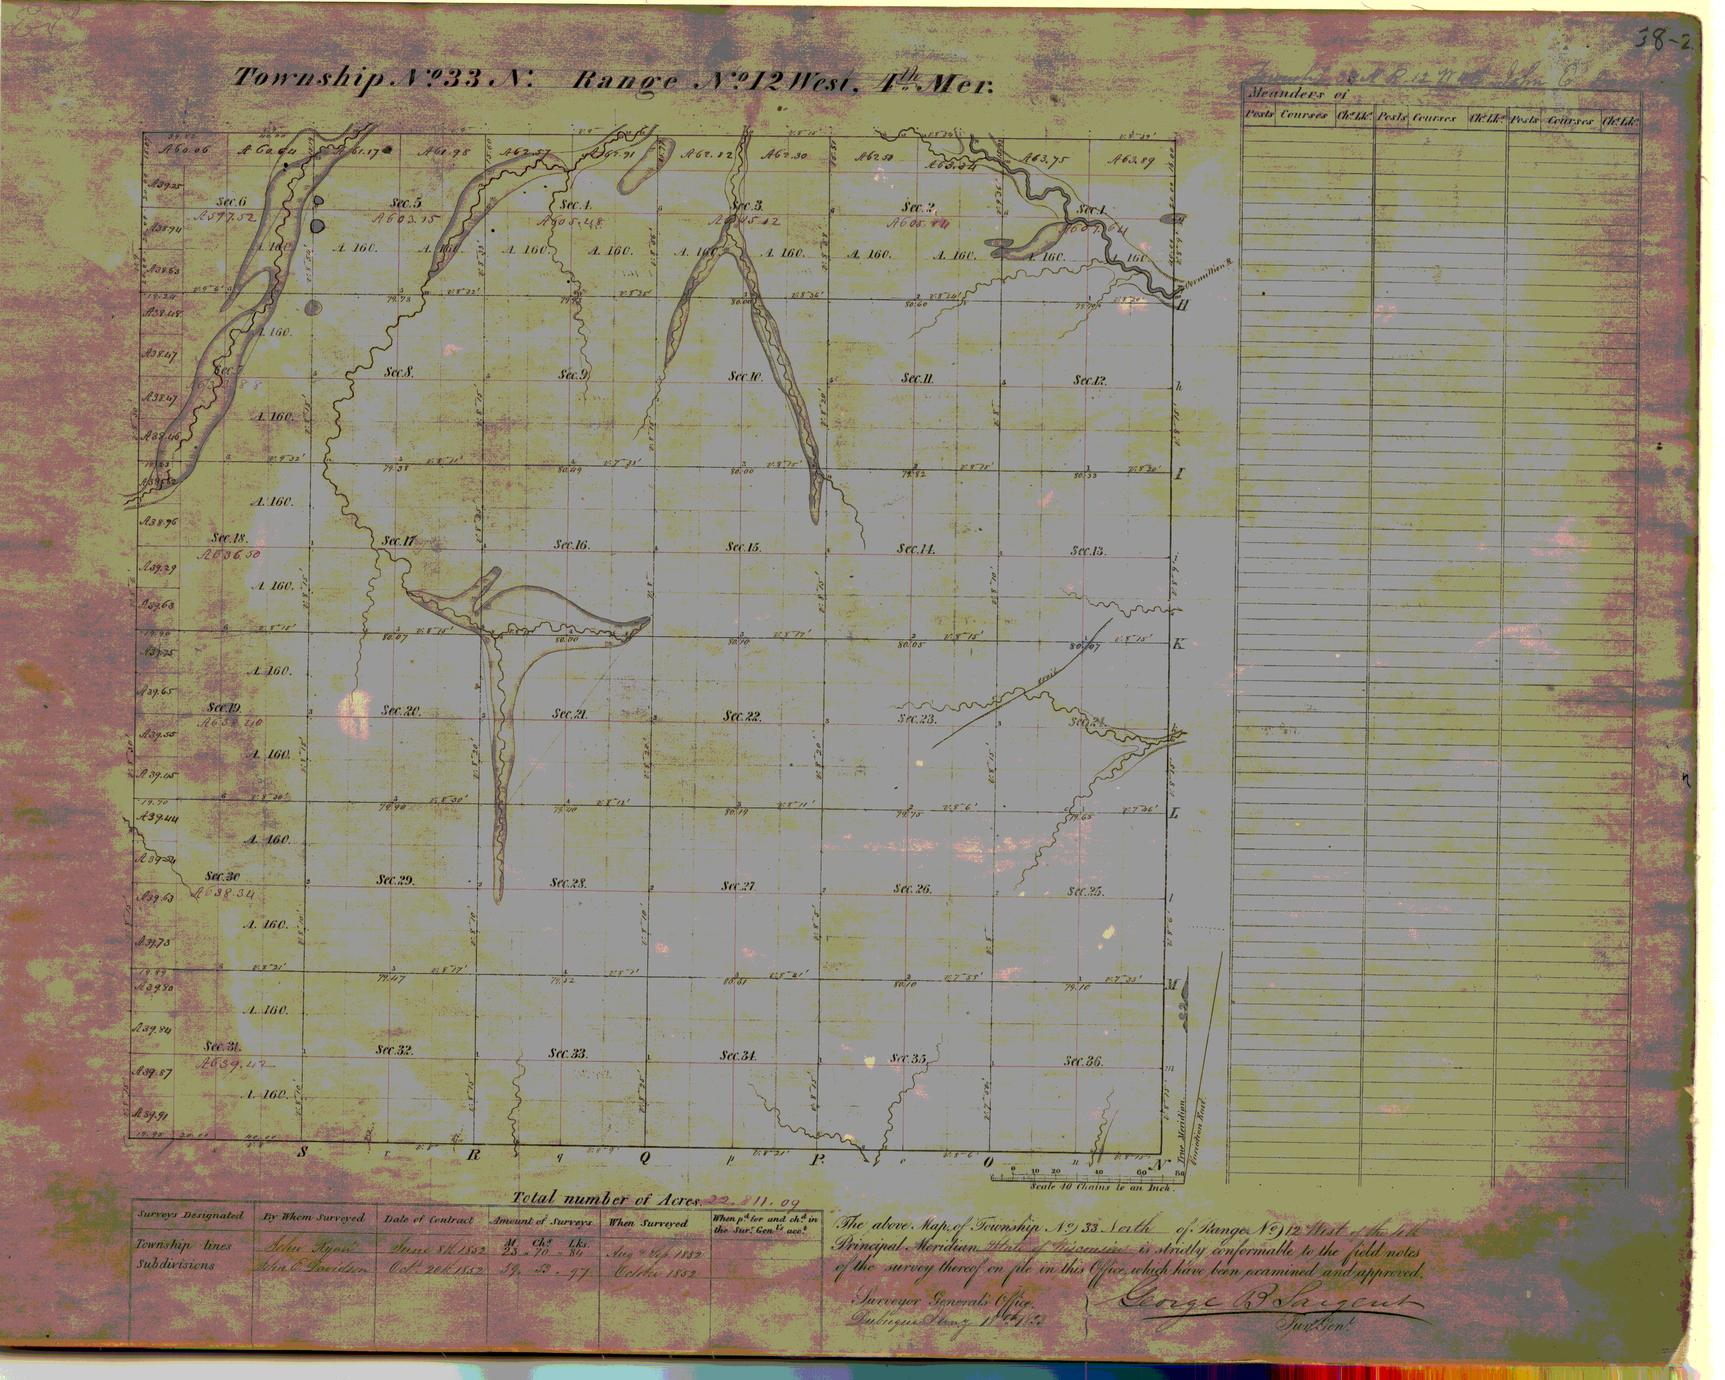 [Public Land Survey System map: Wisconsin Township 33 North, Range 12 West]